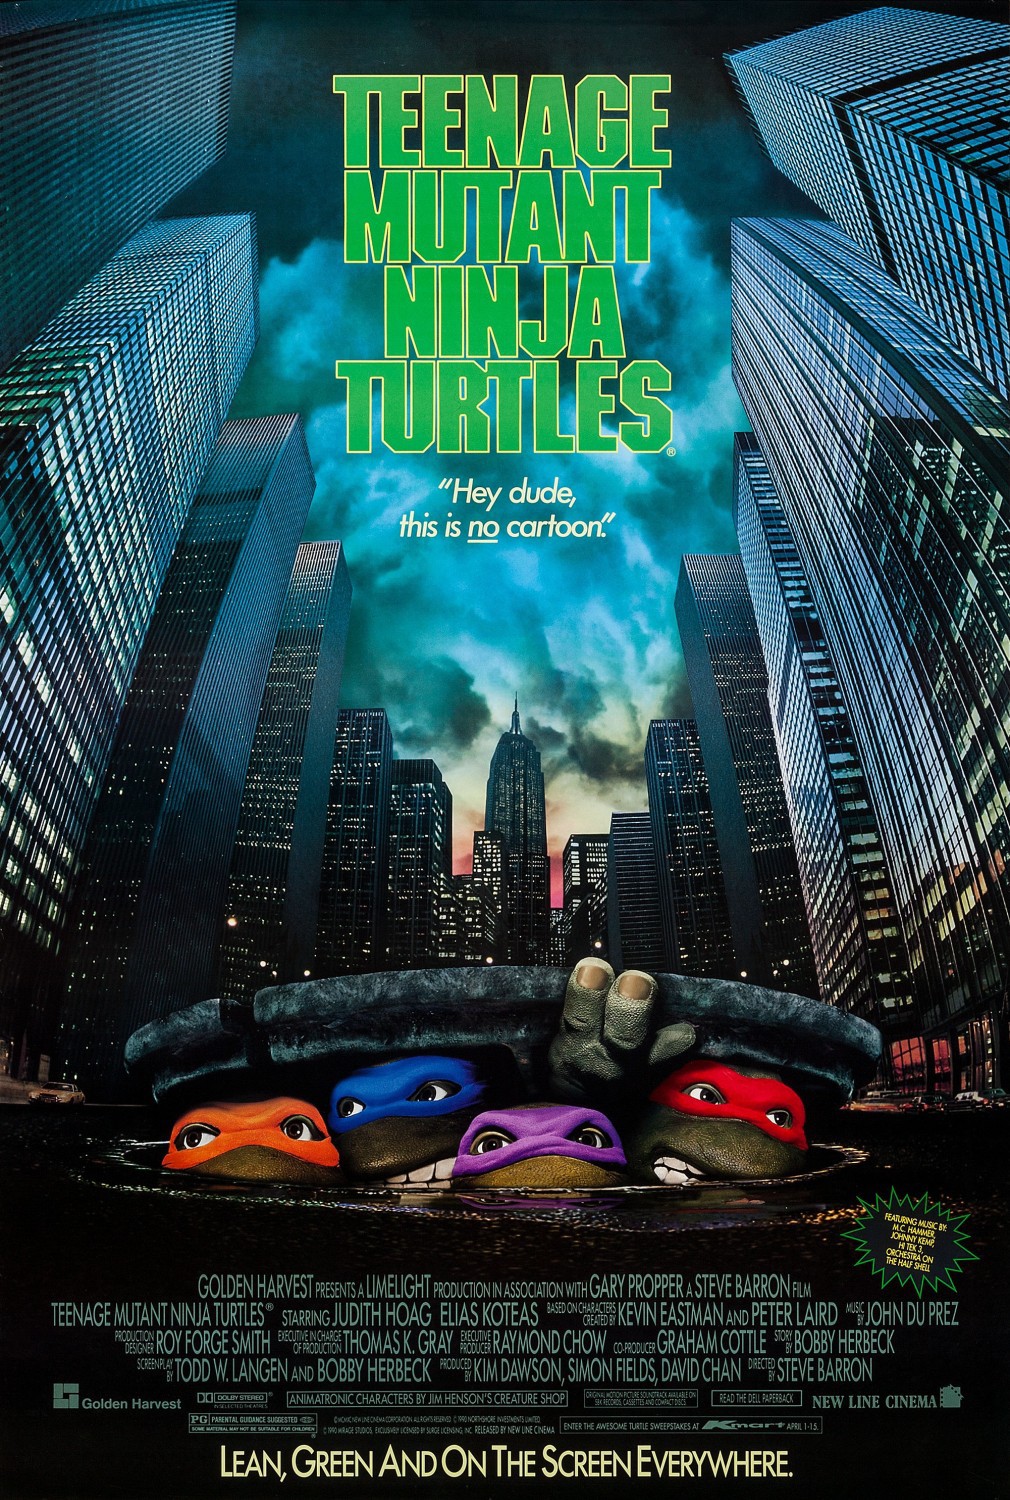 aditya hutapea recommends Ten Inch Mutant Ninja Turtles Full Movie